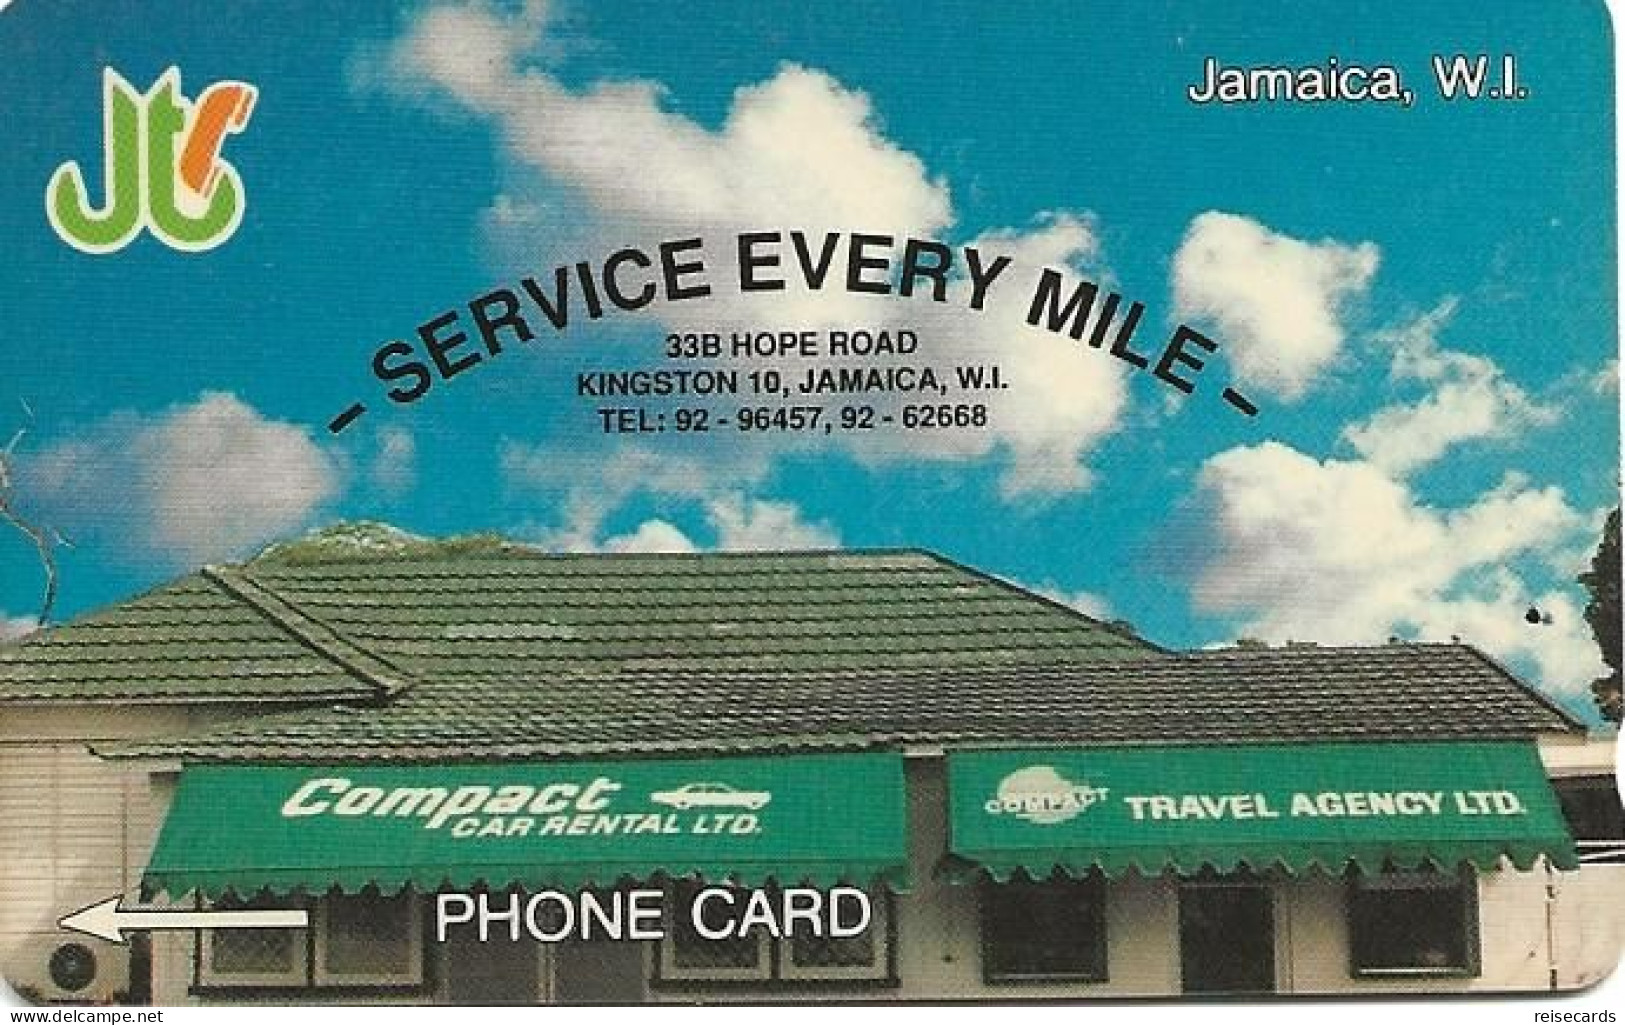 Jamaica: W.I. Service Every Mile - Jamaica